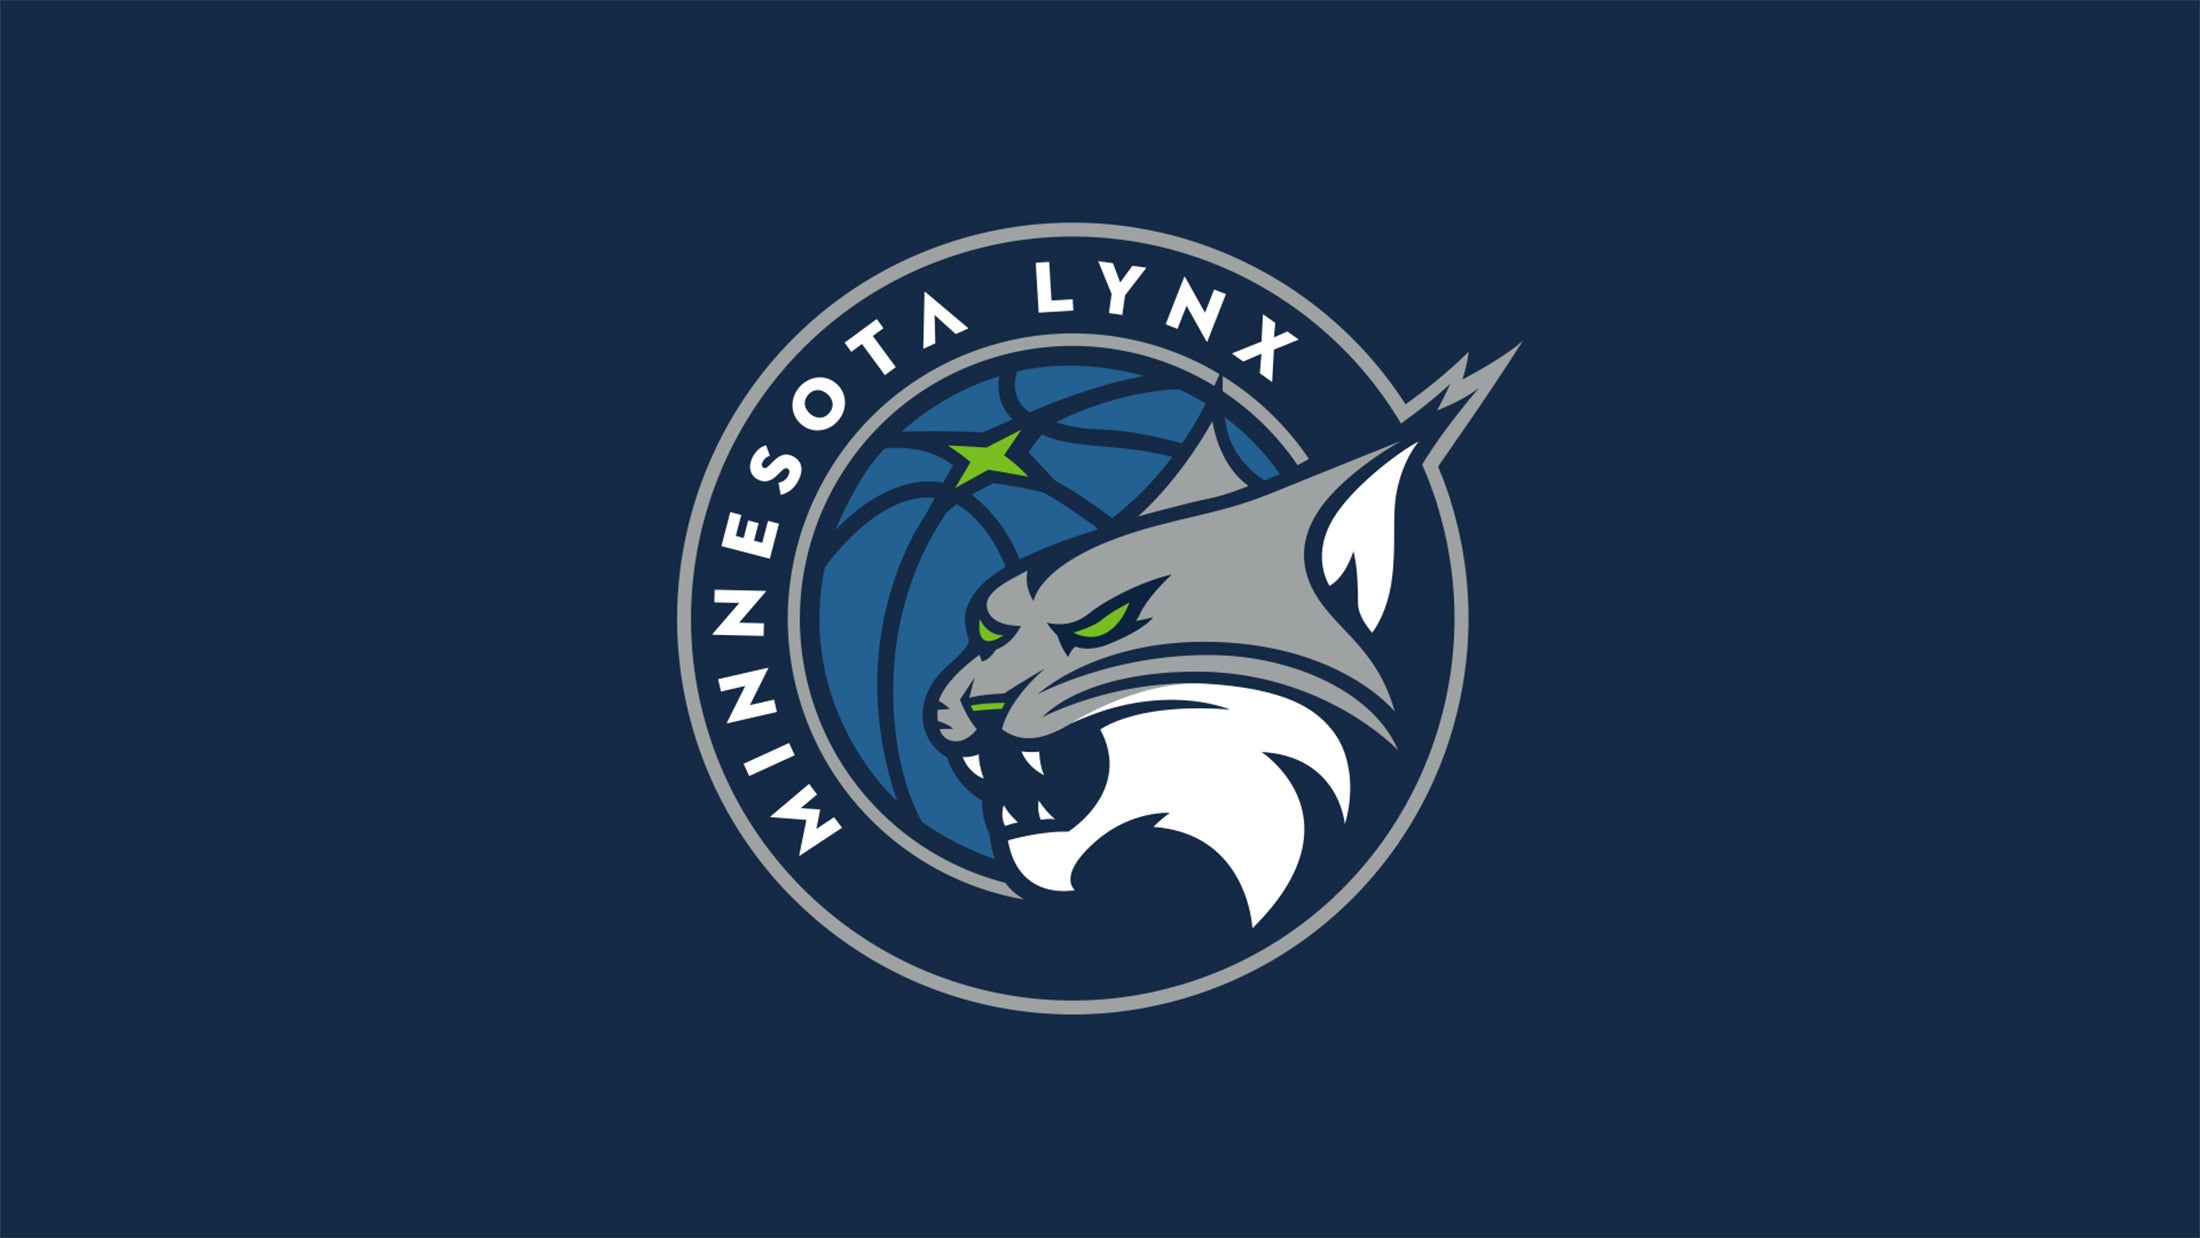 Minnesota Lynx vs. Washington Mystics at Target Center